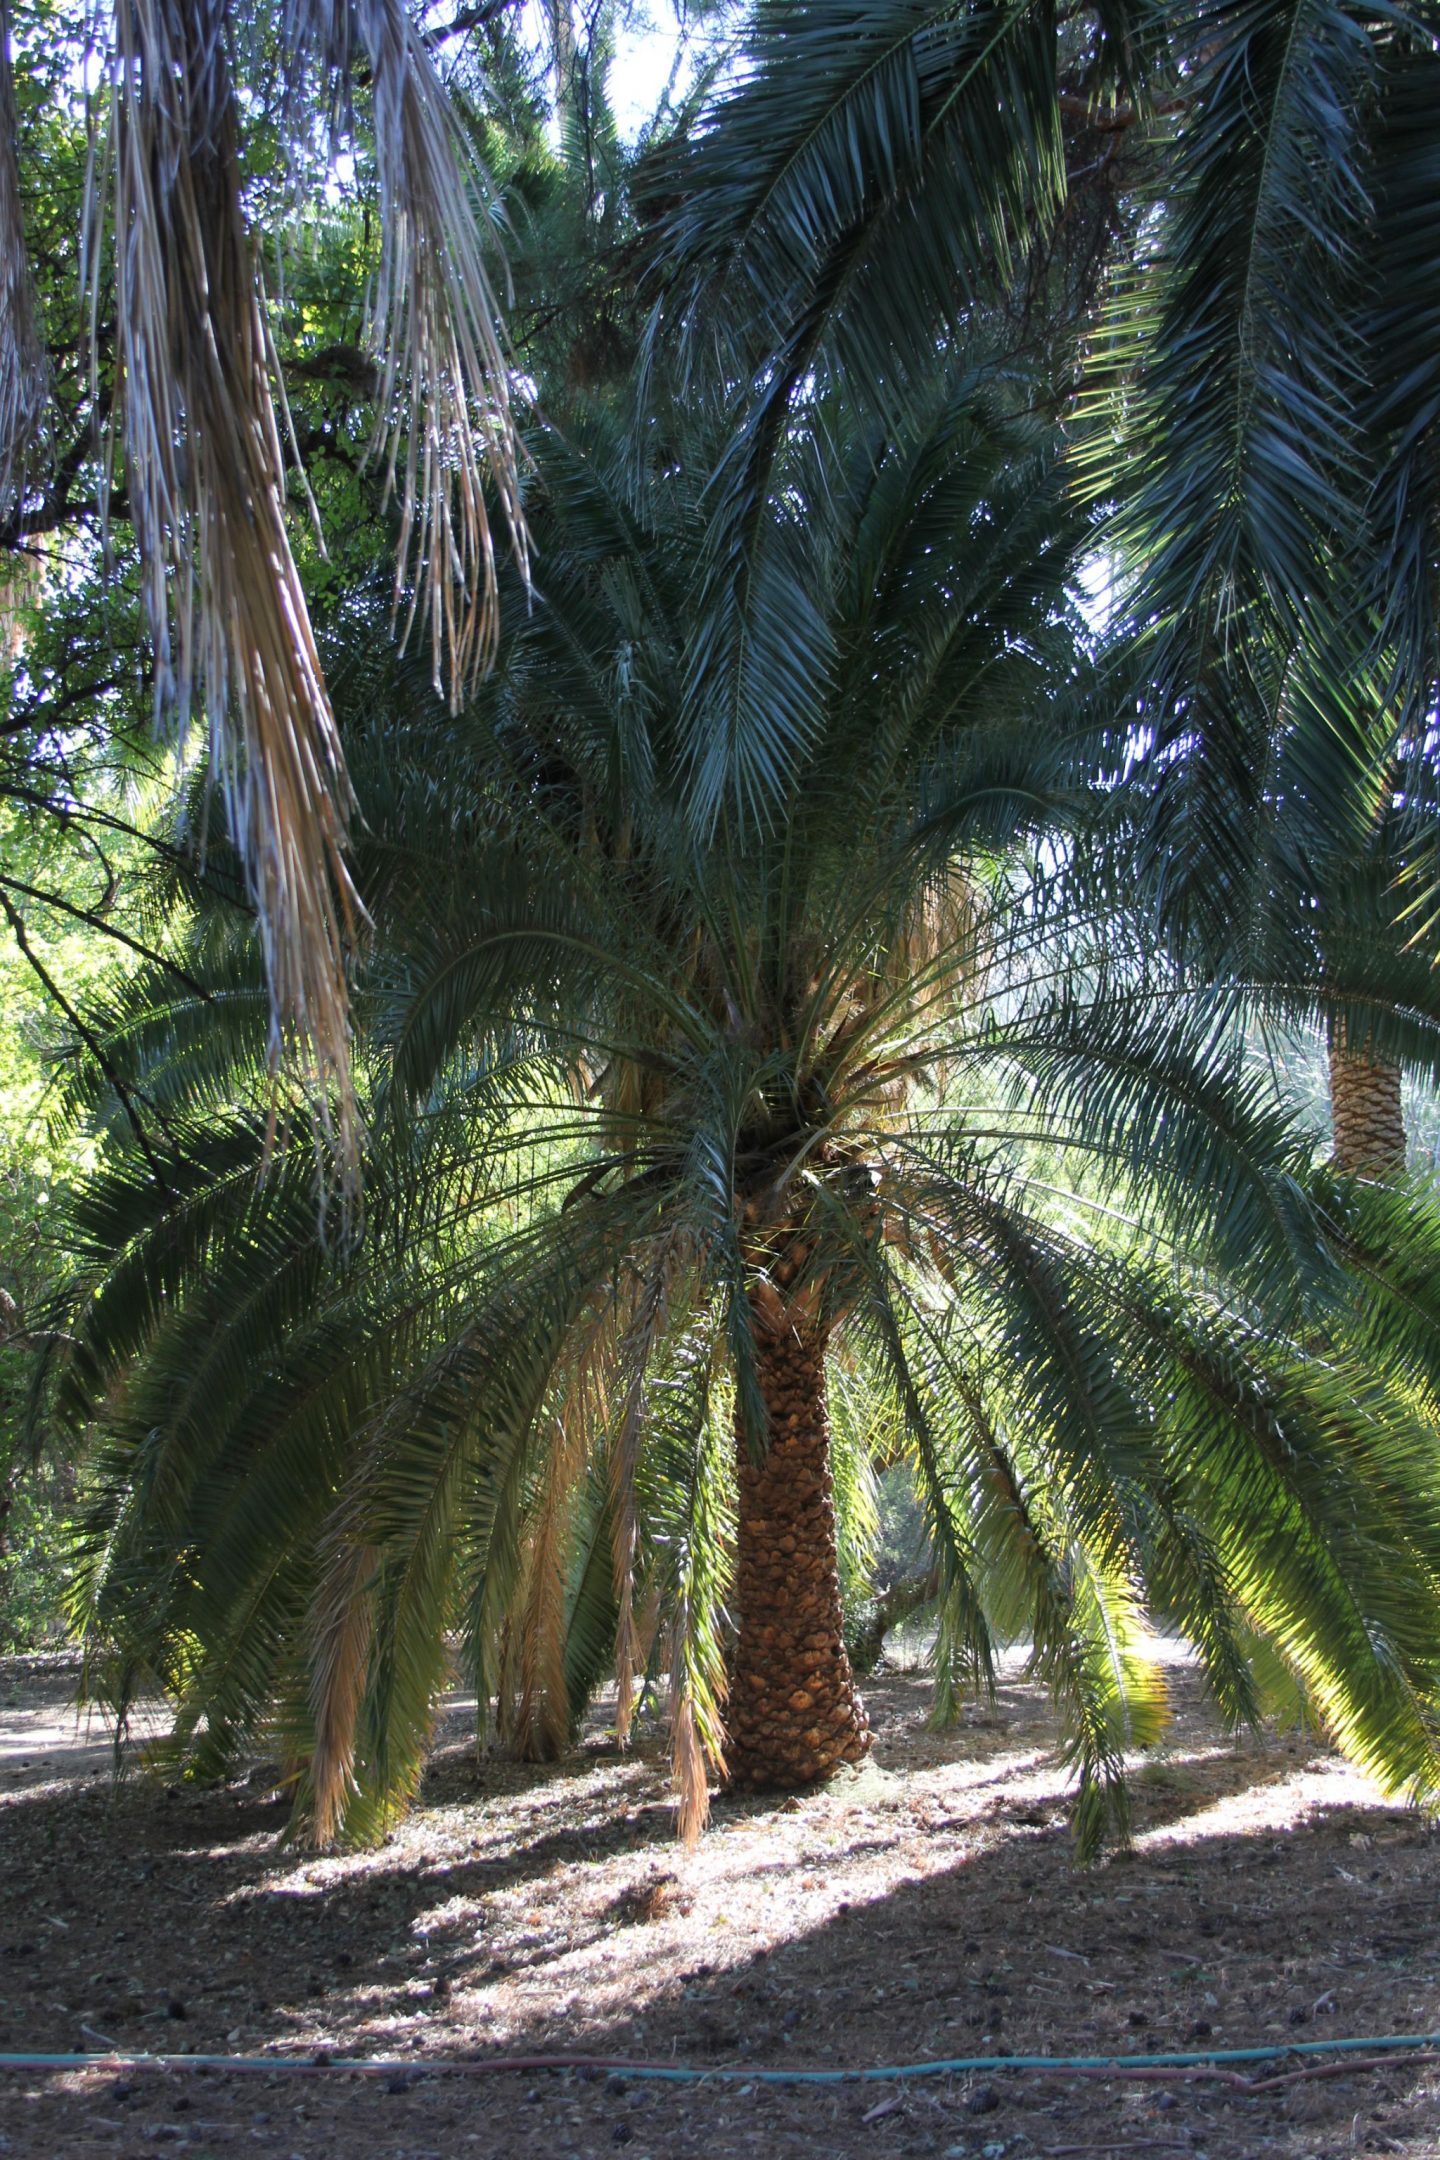 Magnificent palm tree in Boyce Thompson Arboretum in Arizona. #hellolovelystudio #palmtree